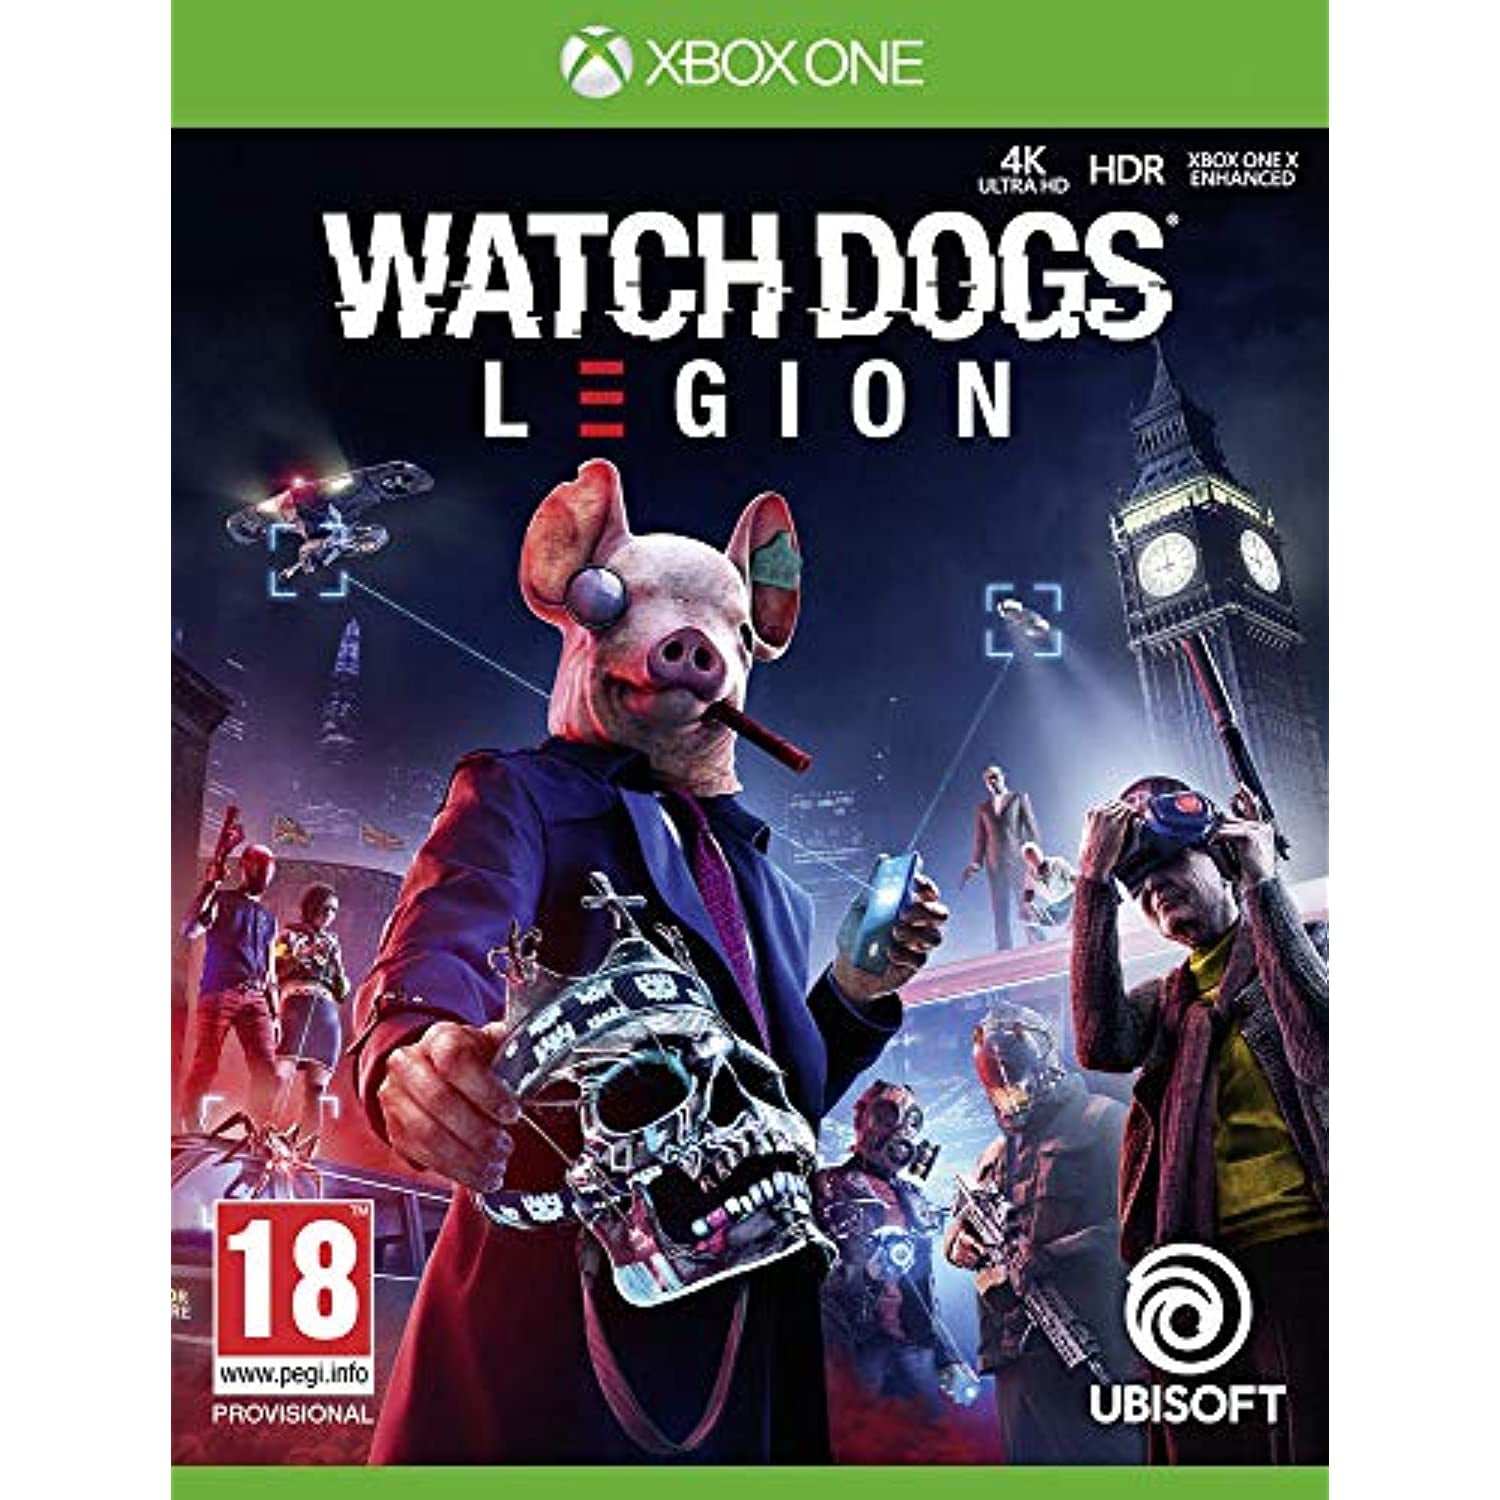 Ps4 watch Dogs Legion. Watch Dogs диск ps4. Вотч догс Легион иксбокс. Watch Dogs Xbox one.